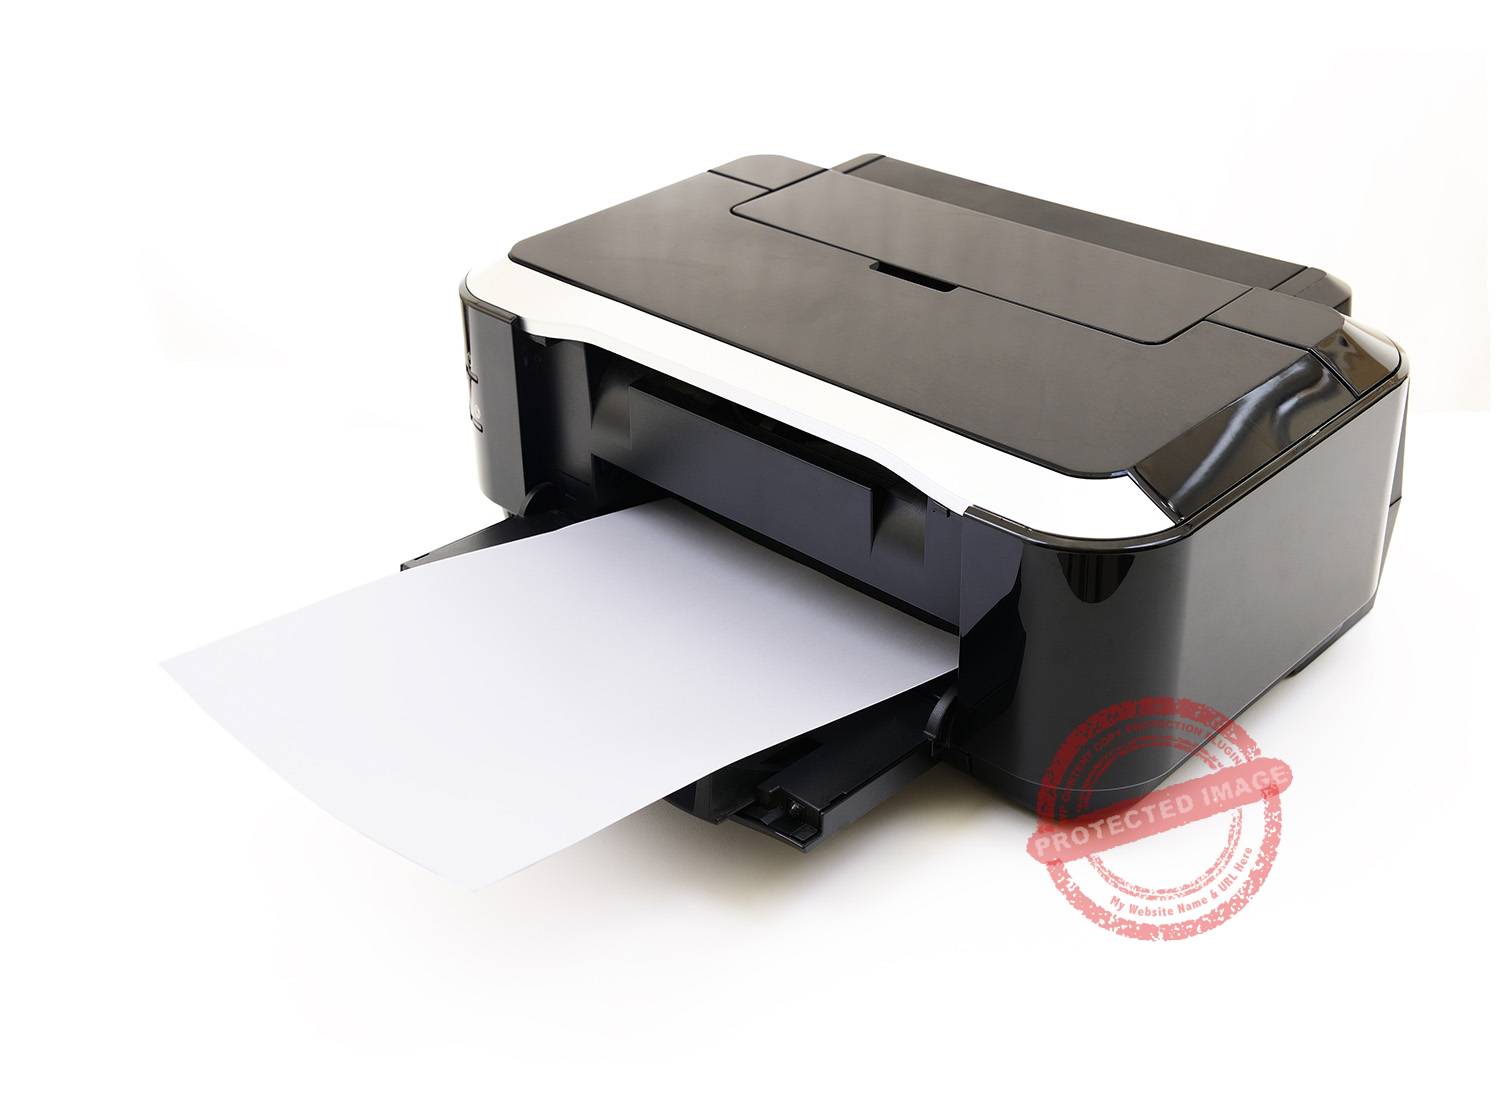 Printing devices. Принтеры Canon PIXMA mg4240. Дрюкер принтер. Бумага для принтера. Бумага для печати на принтере.